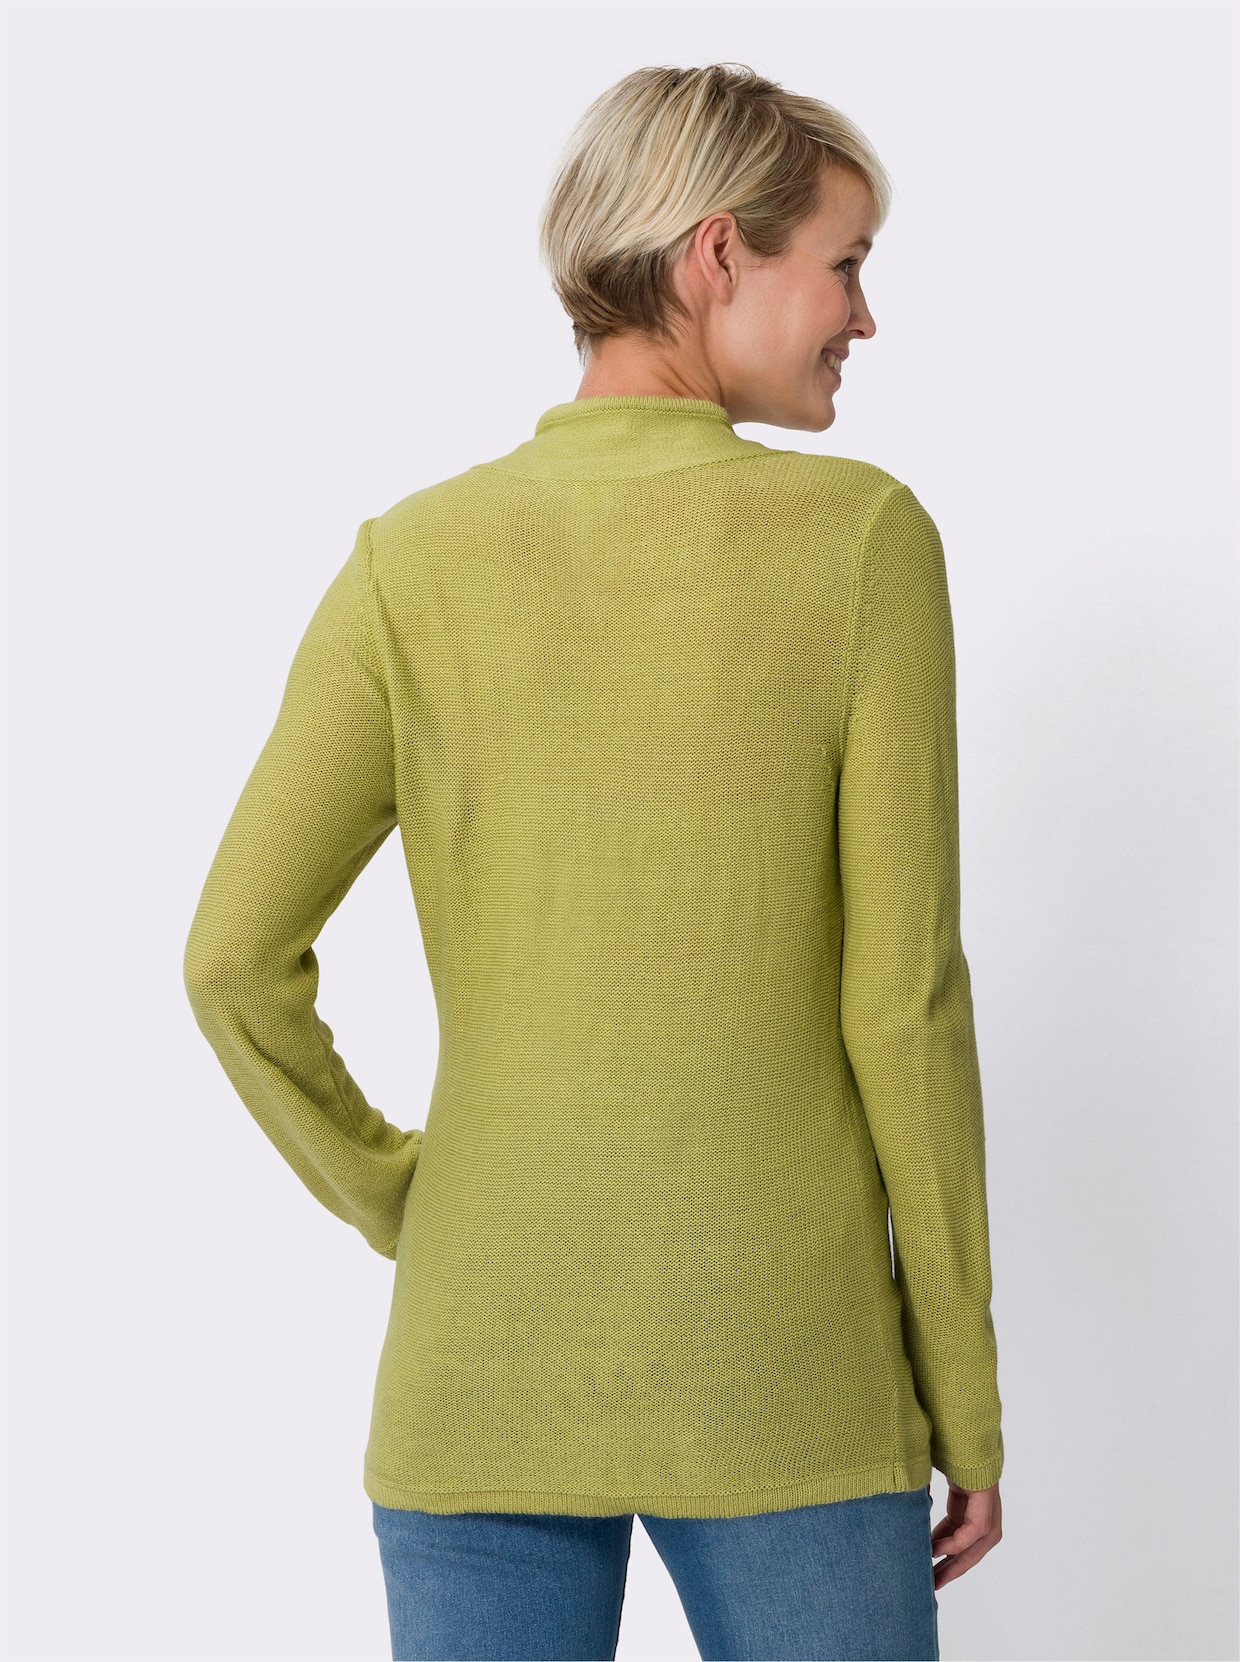 Langarm-Pullover - lindgrün